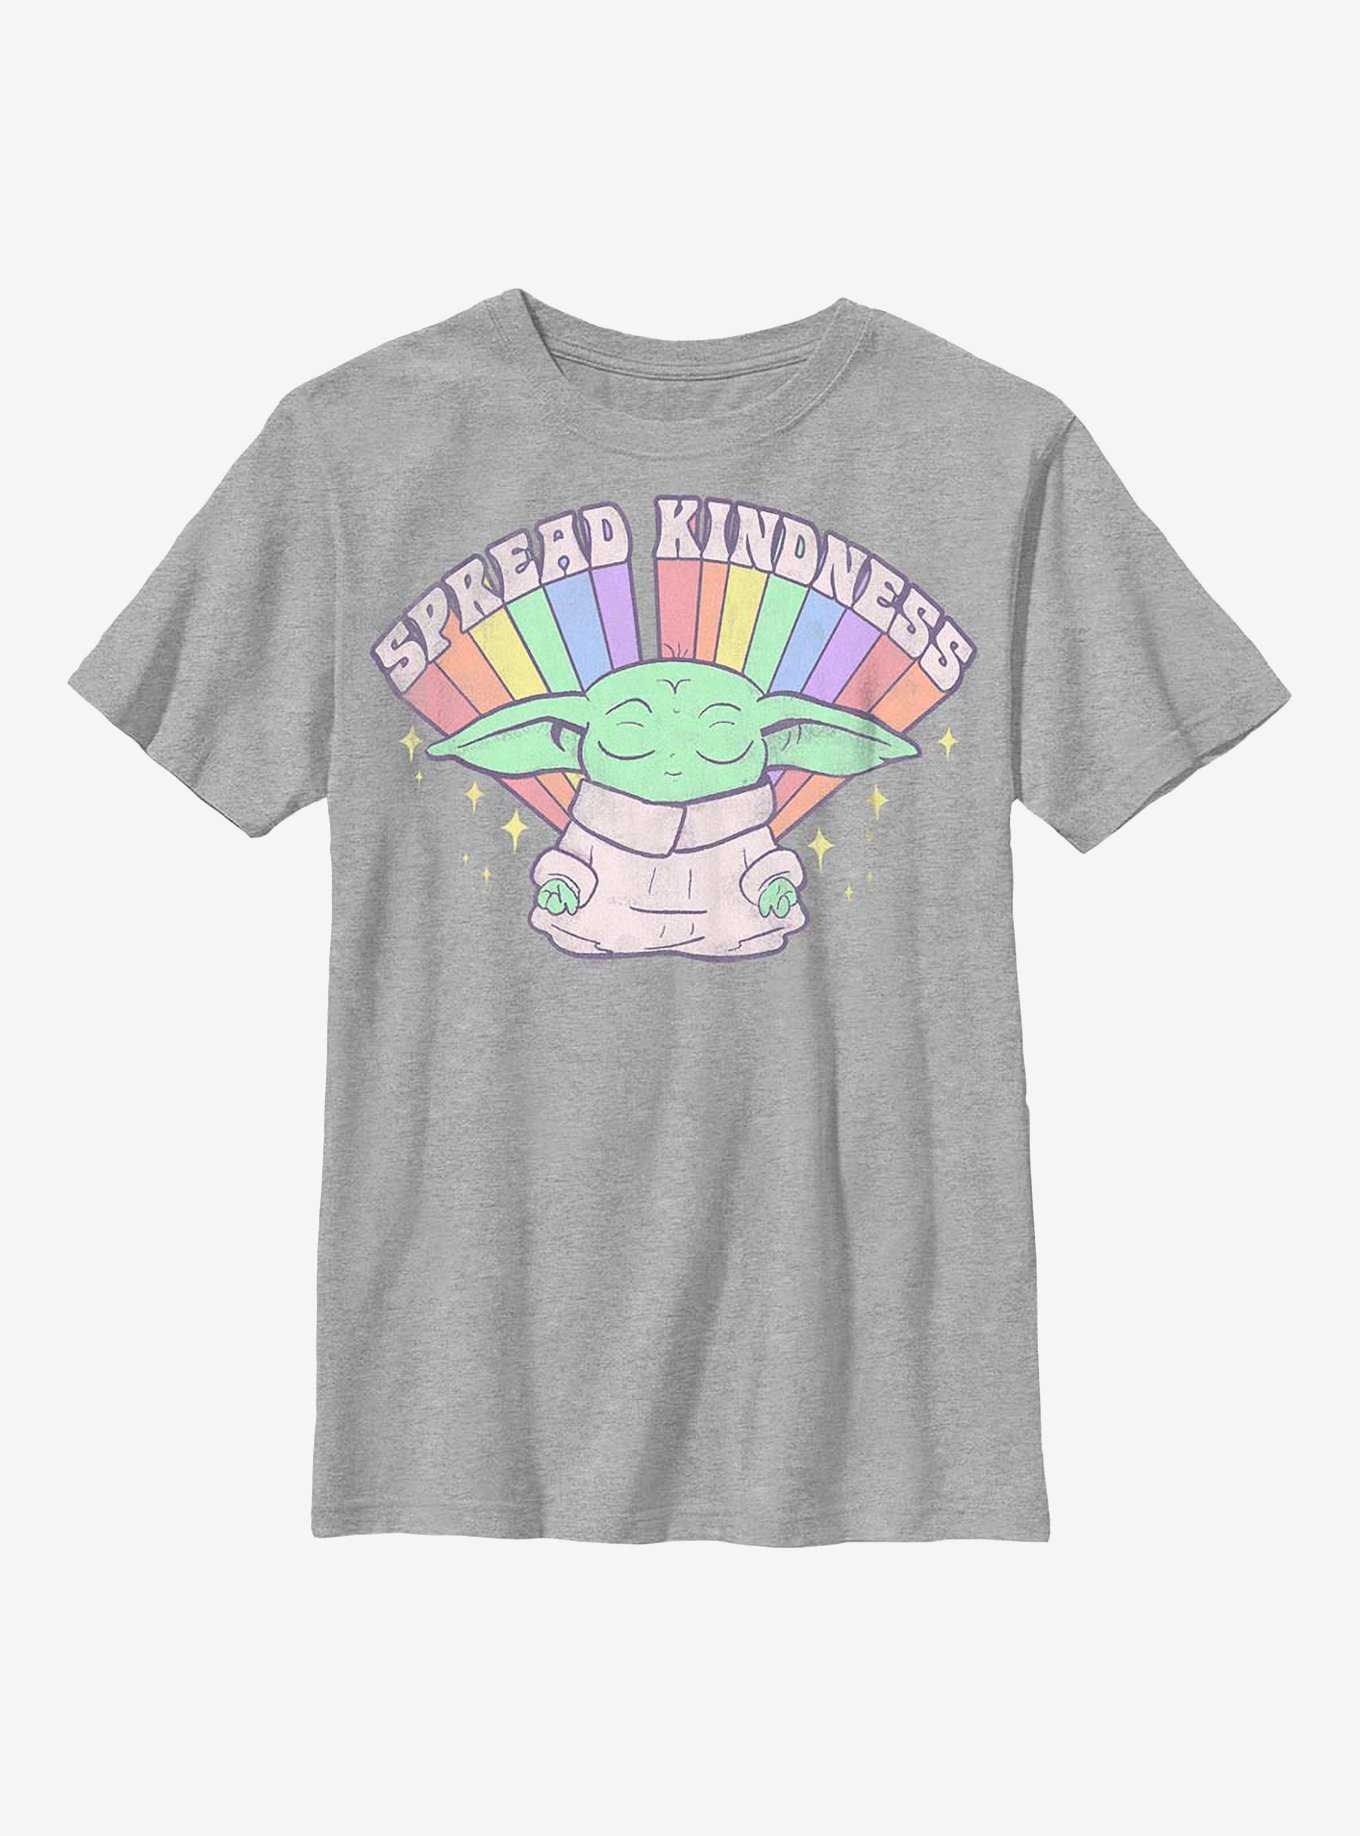 Star Wars The Mandalorian Pride Meditate Kindness Youth T-Shirt, , hi-res